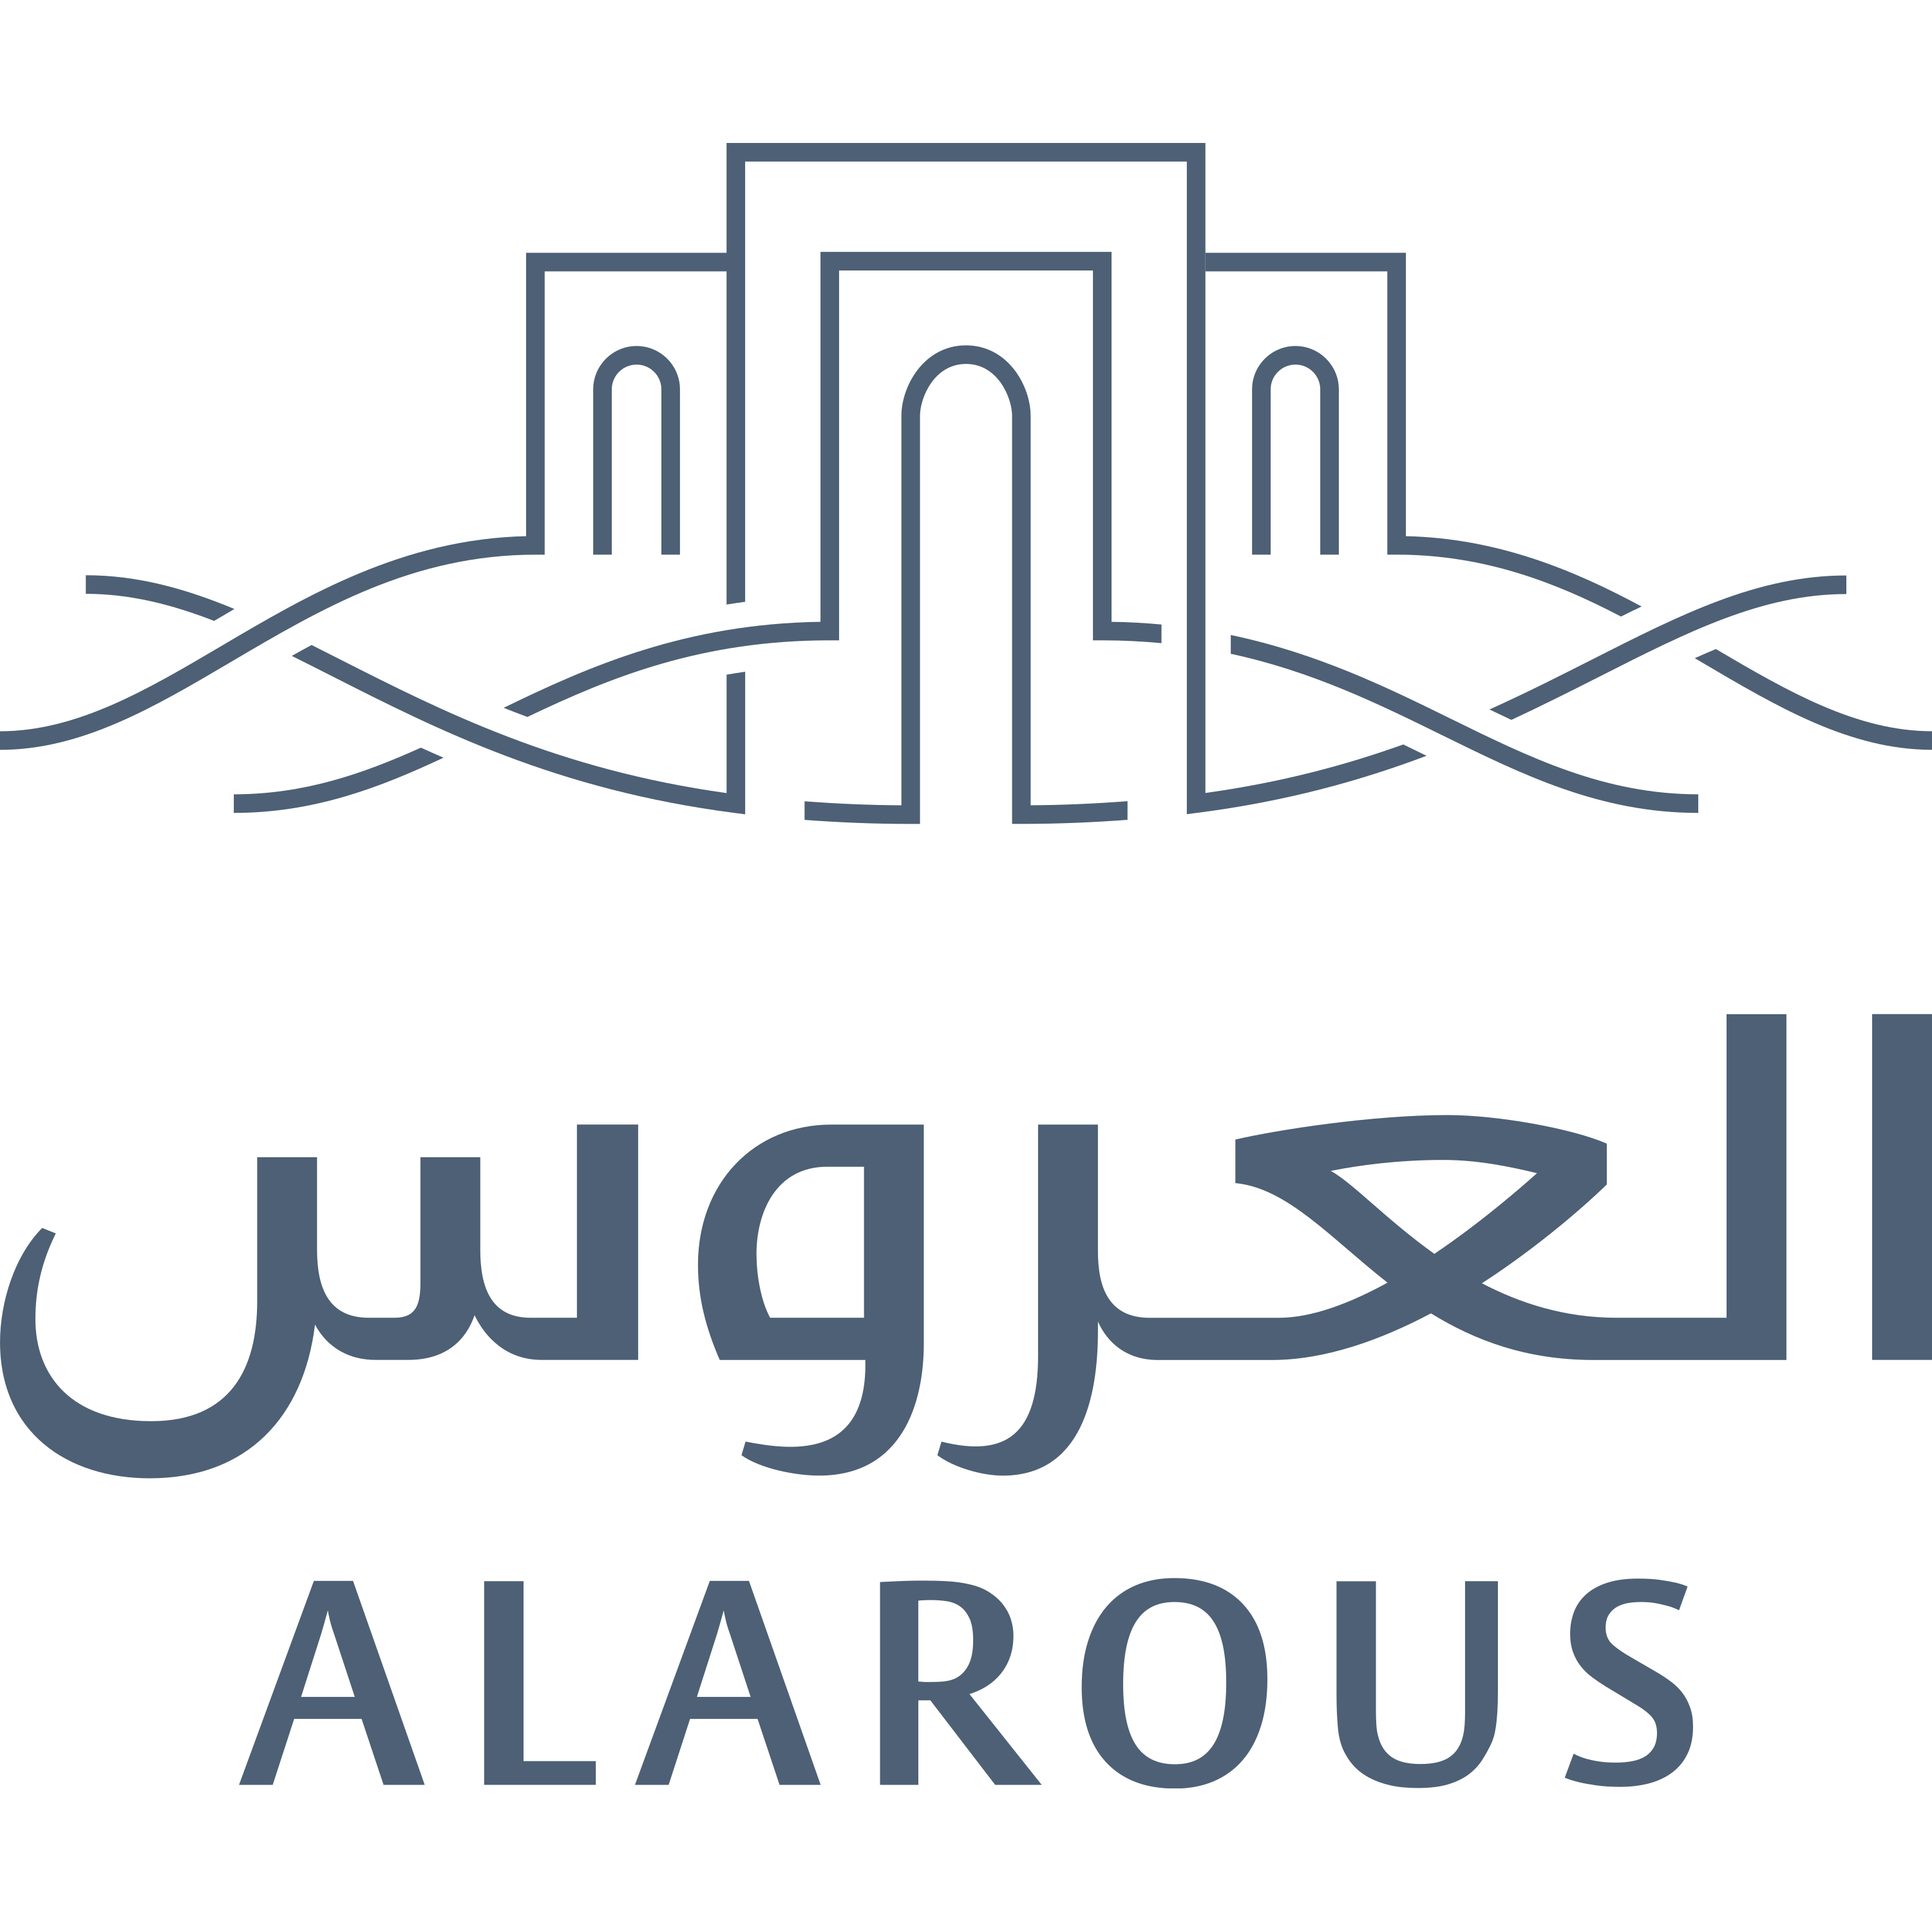 Alarous Logo  Transparent Image